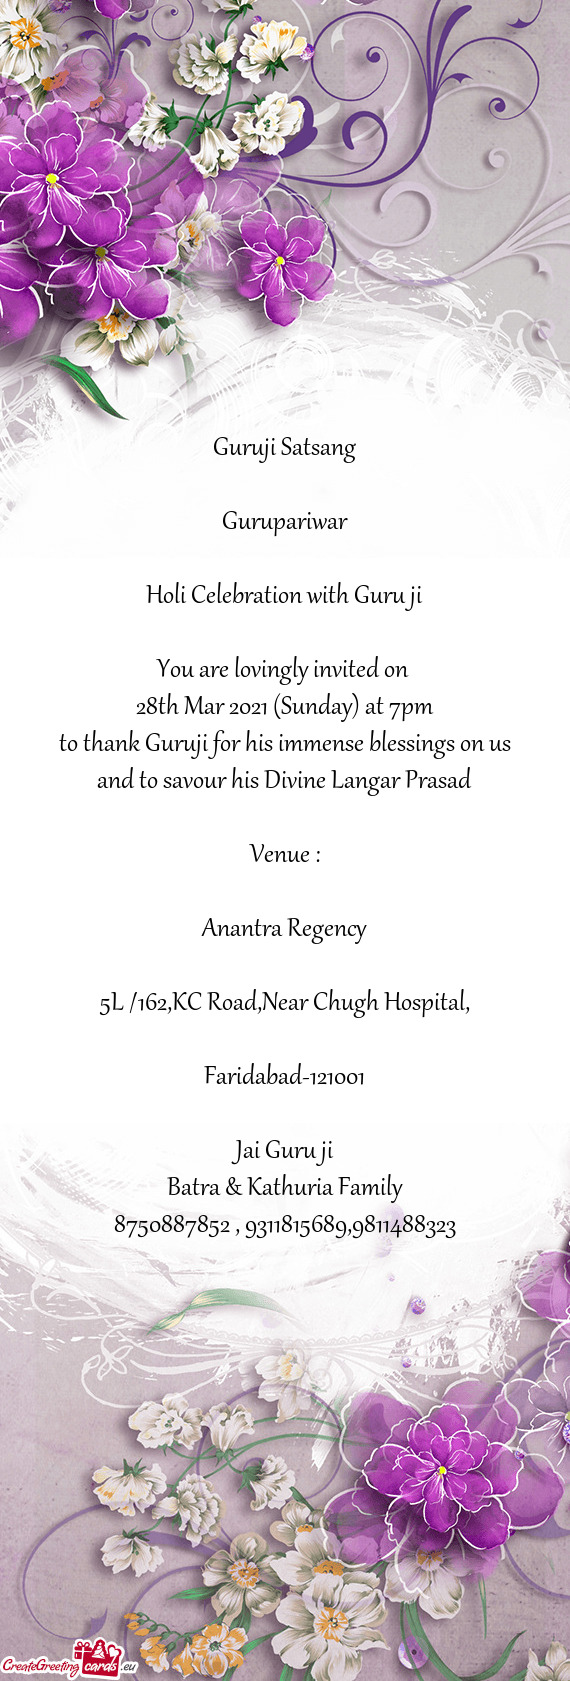 Holi Celebration with Guru ji